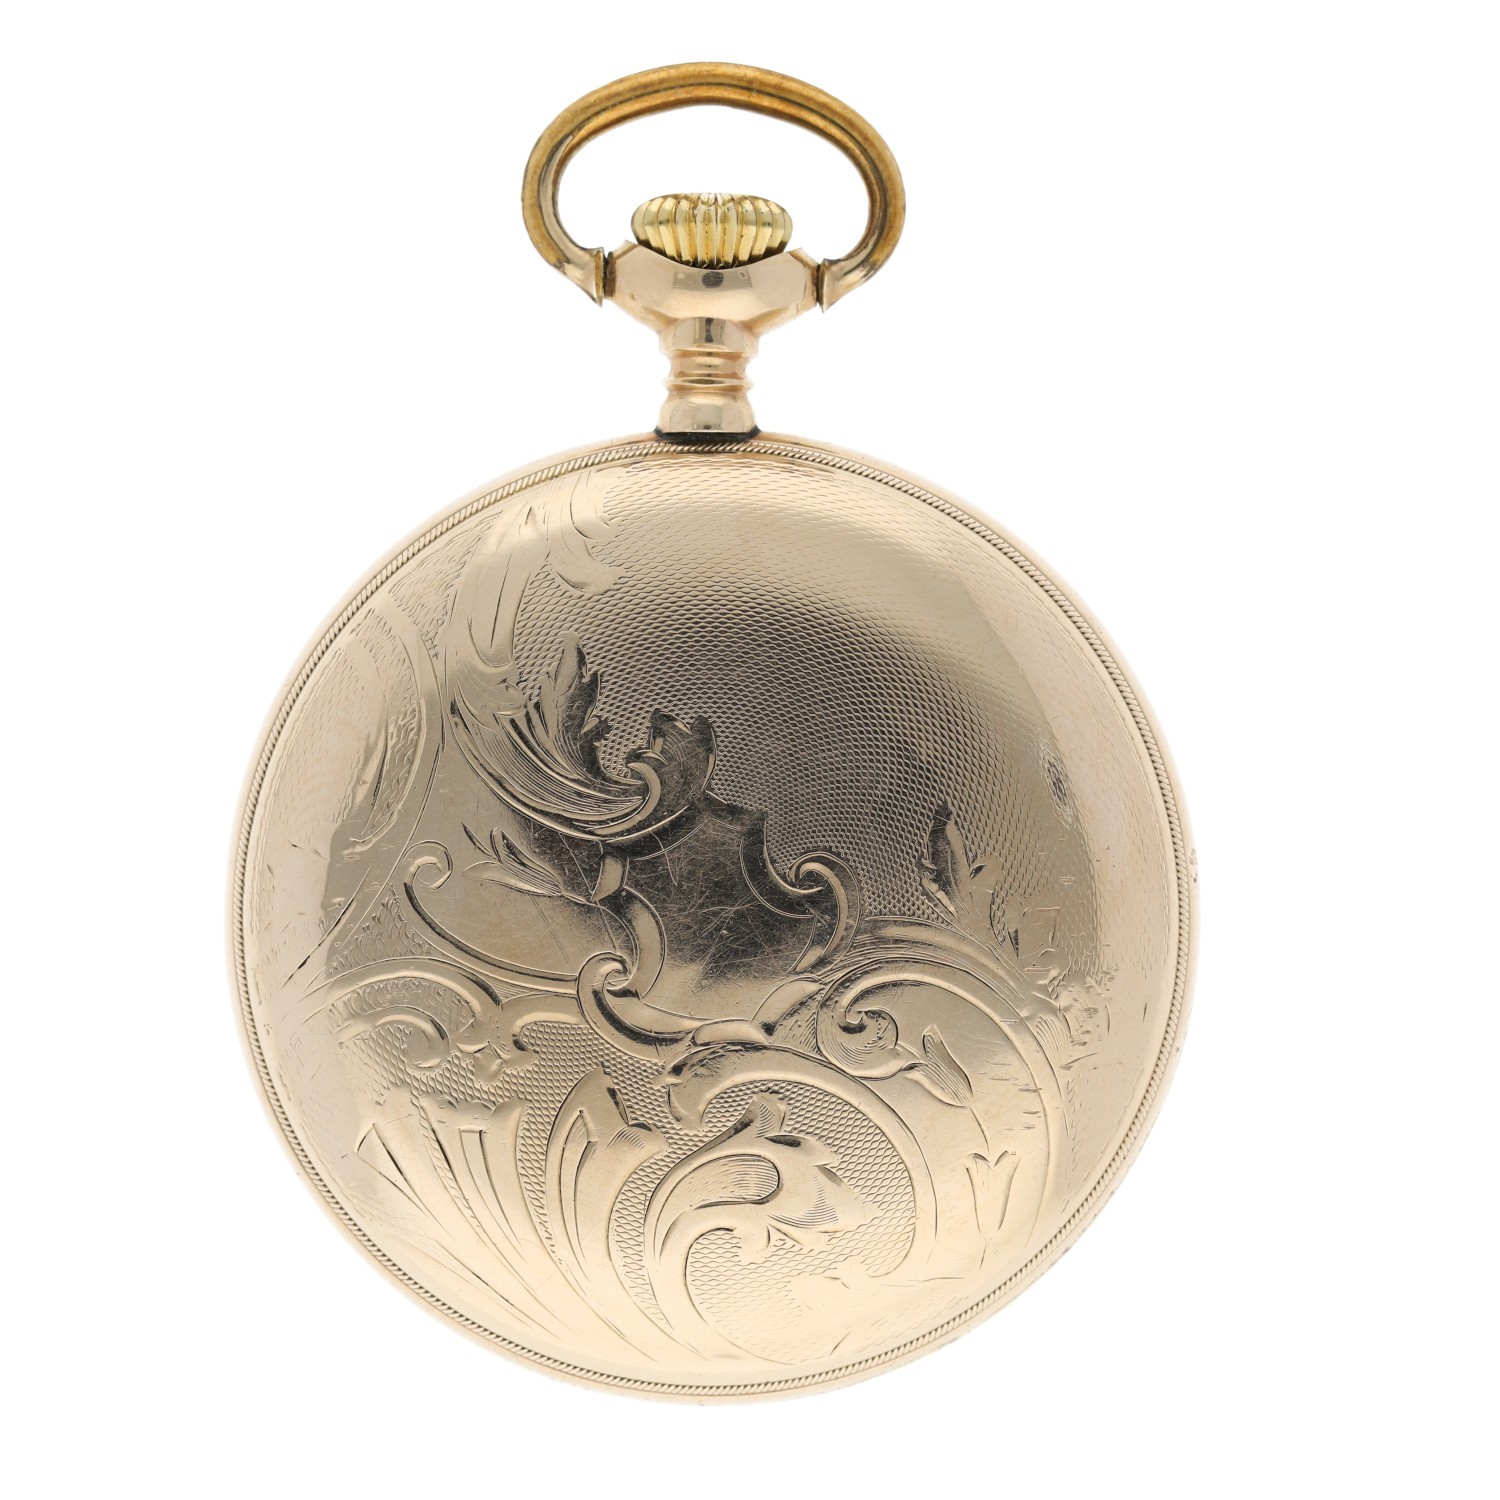 Burlington Watch Co. 'Burlington Special' gold plated lever set pocket watch, circa 1912, signed - Image 4 of 4